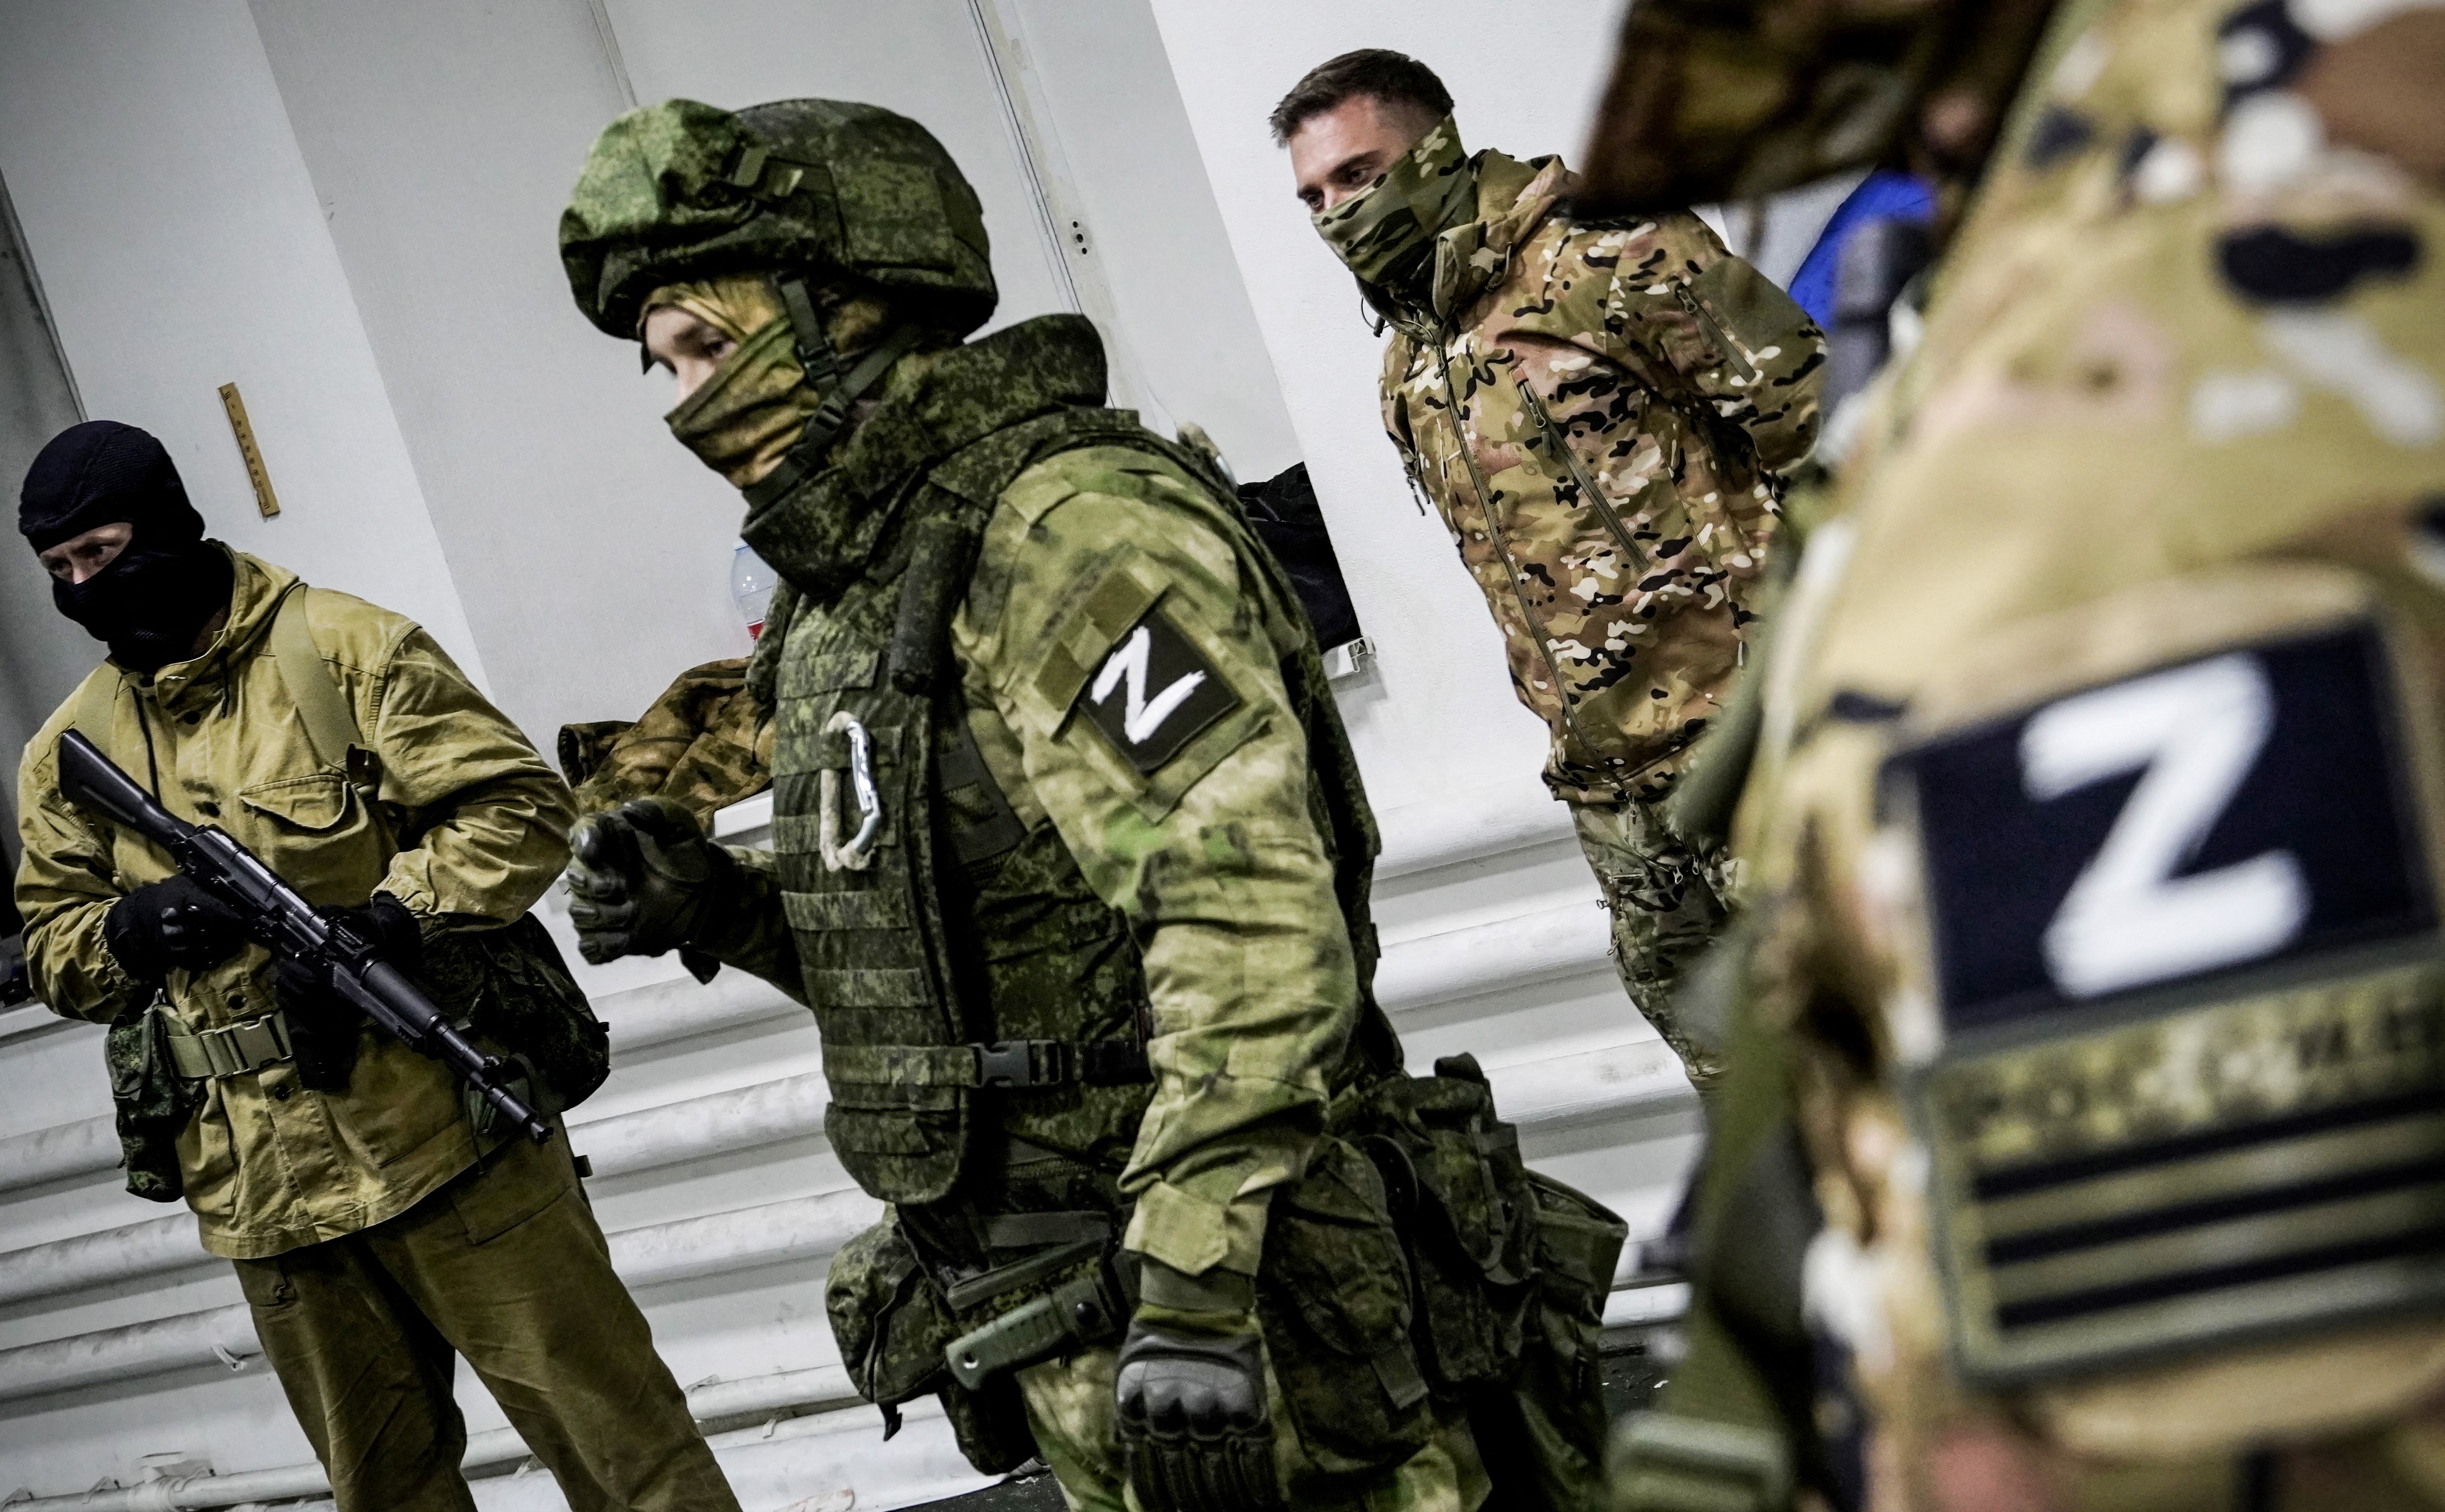 Russian soldiers storm US Capitol in pro-Putin calendar